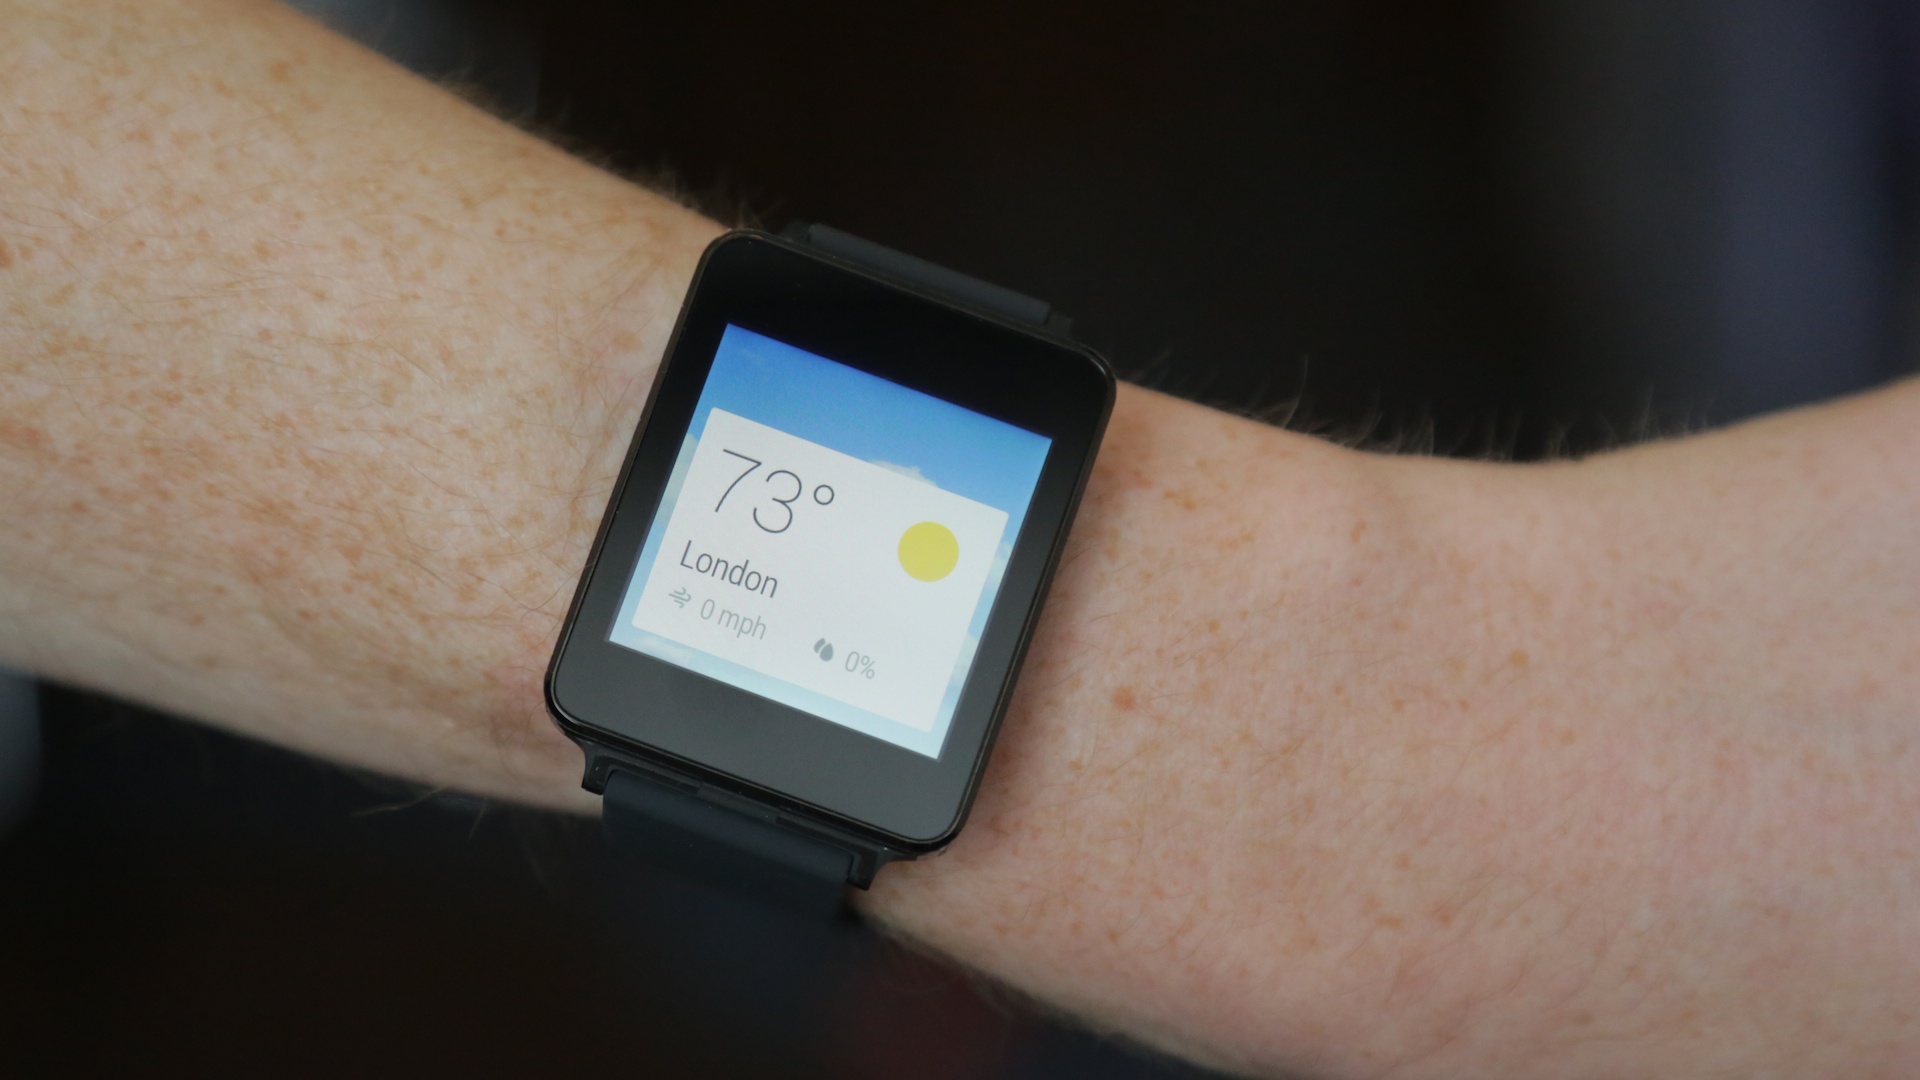 LG G Watch Hands-On: A Smartwatch That Feels Like A Watch